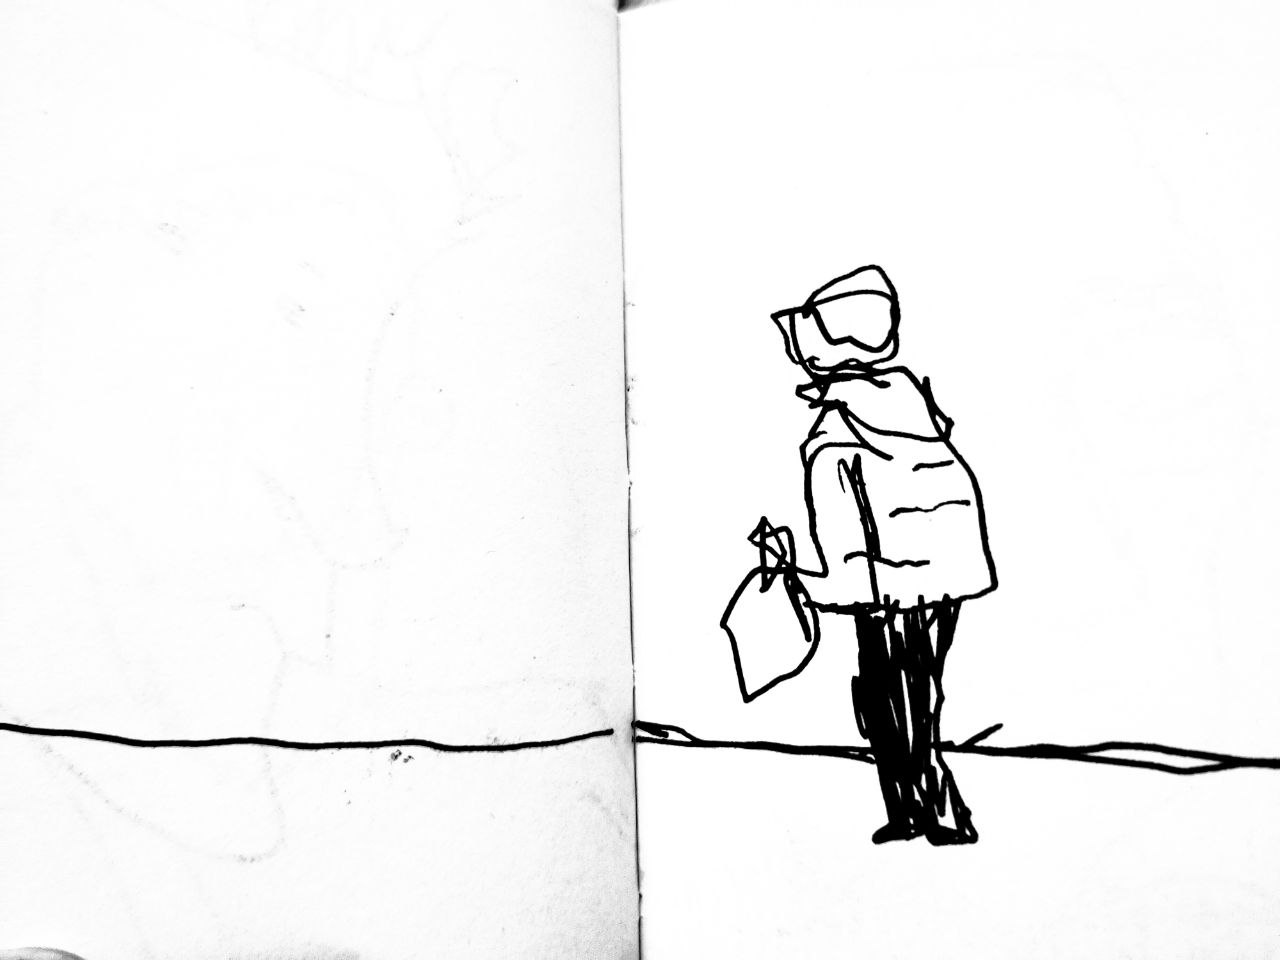 Quick sketch of an elderly lady walking across the street